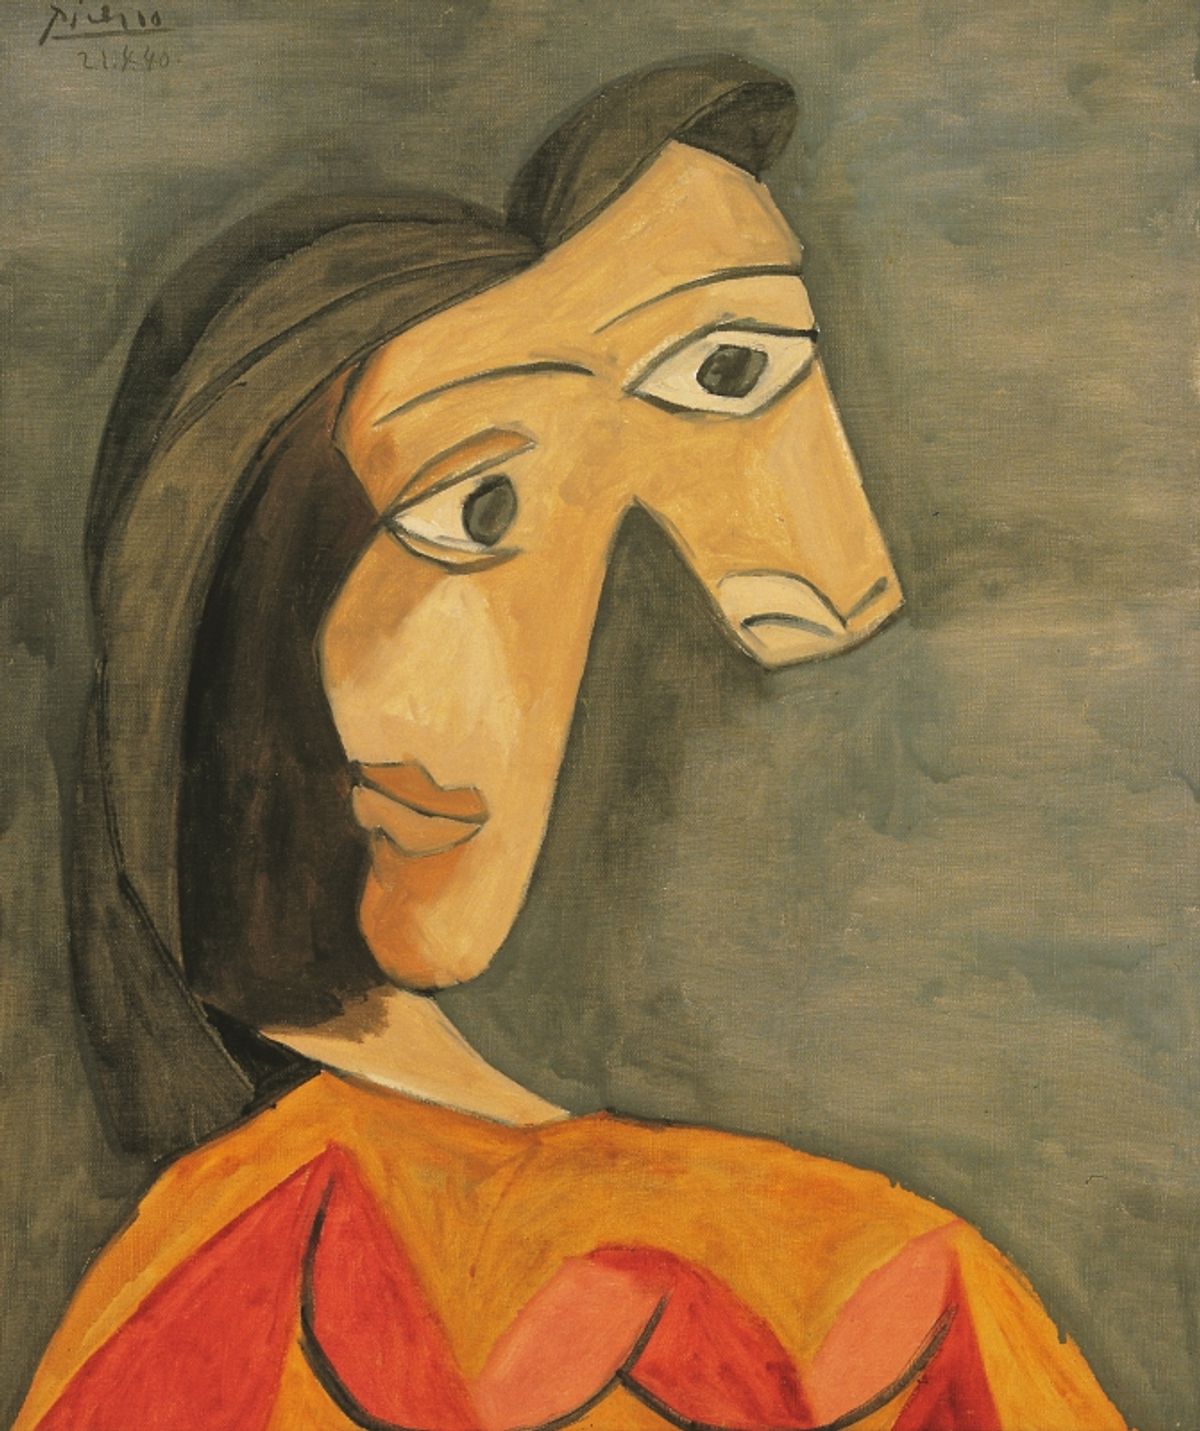 Pablo Picasso, Le Corsage orange – Dora Maar, 1940, huile sur toile, Erstein, musée Würth. © Succession Picasso. Courtesy Leopold Museum. Photo Volker Naumann, Schönaich